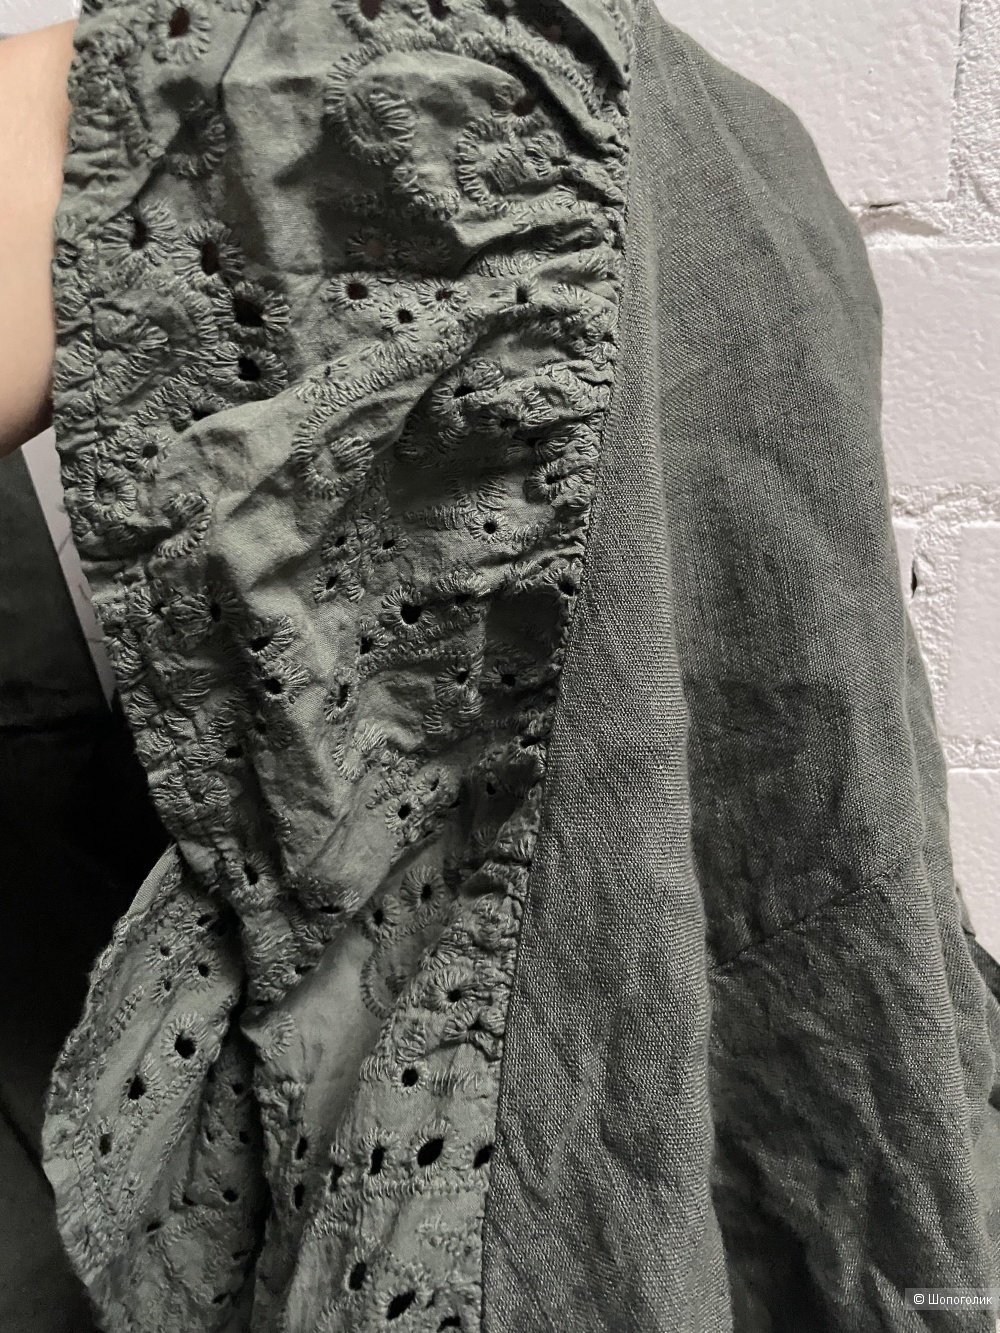 Promo Платье лен с шитьем 100% lino, 42-50